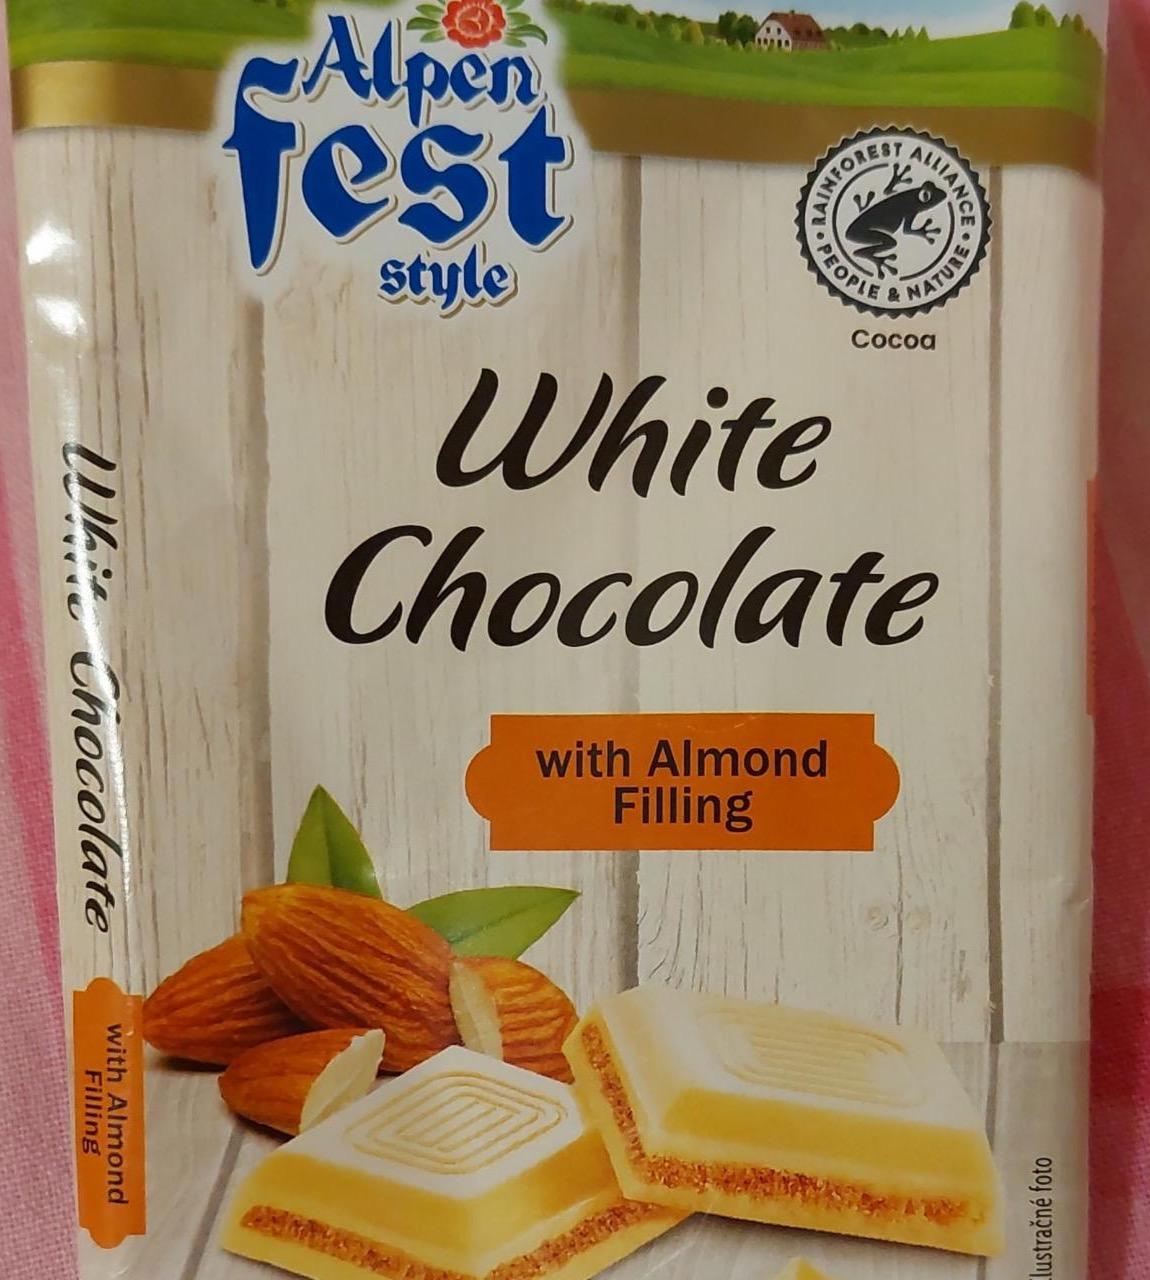 Képek - White chocolate with almond filling Alpen fest style